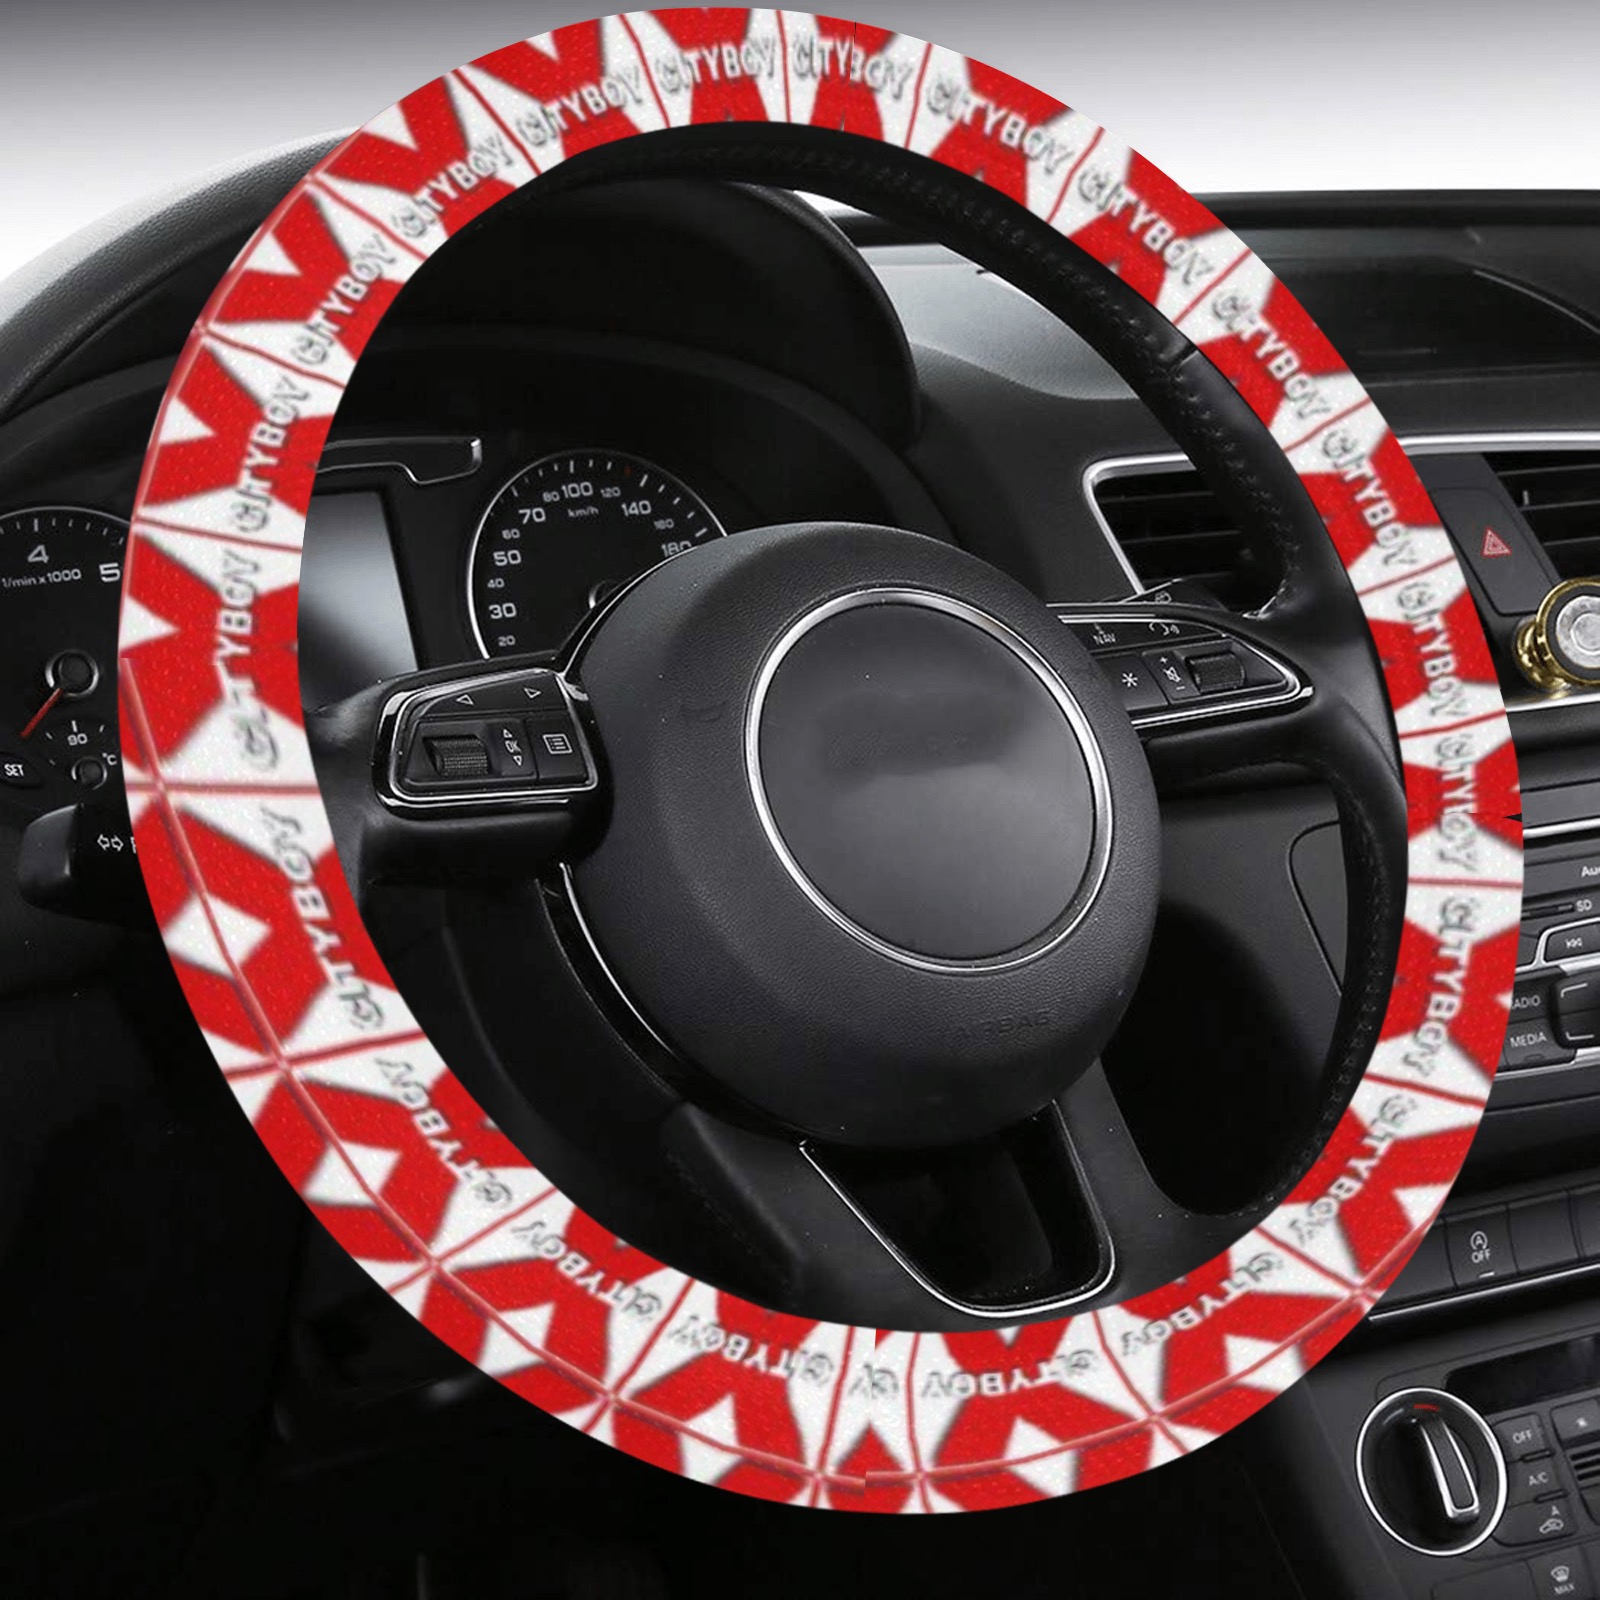 CITYBOY NYC print Steering Wheel Cover with Anti-Slip Insert